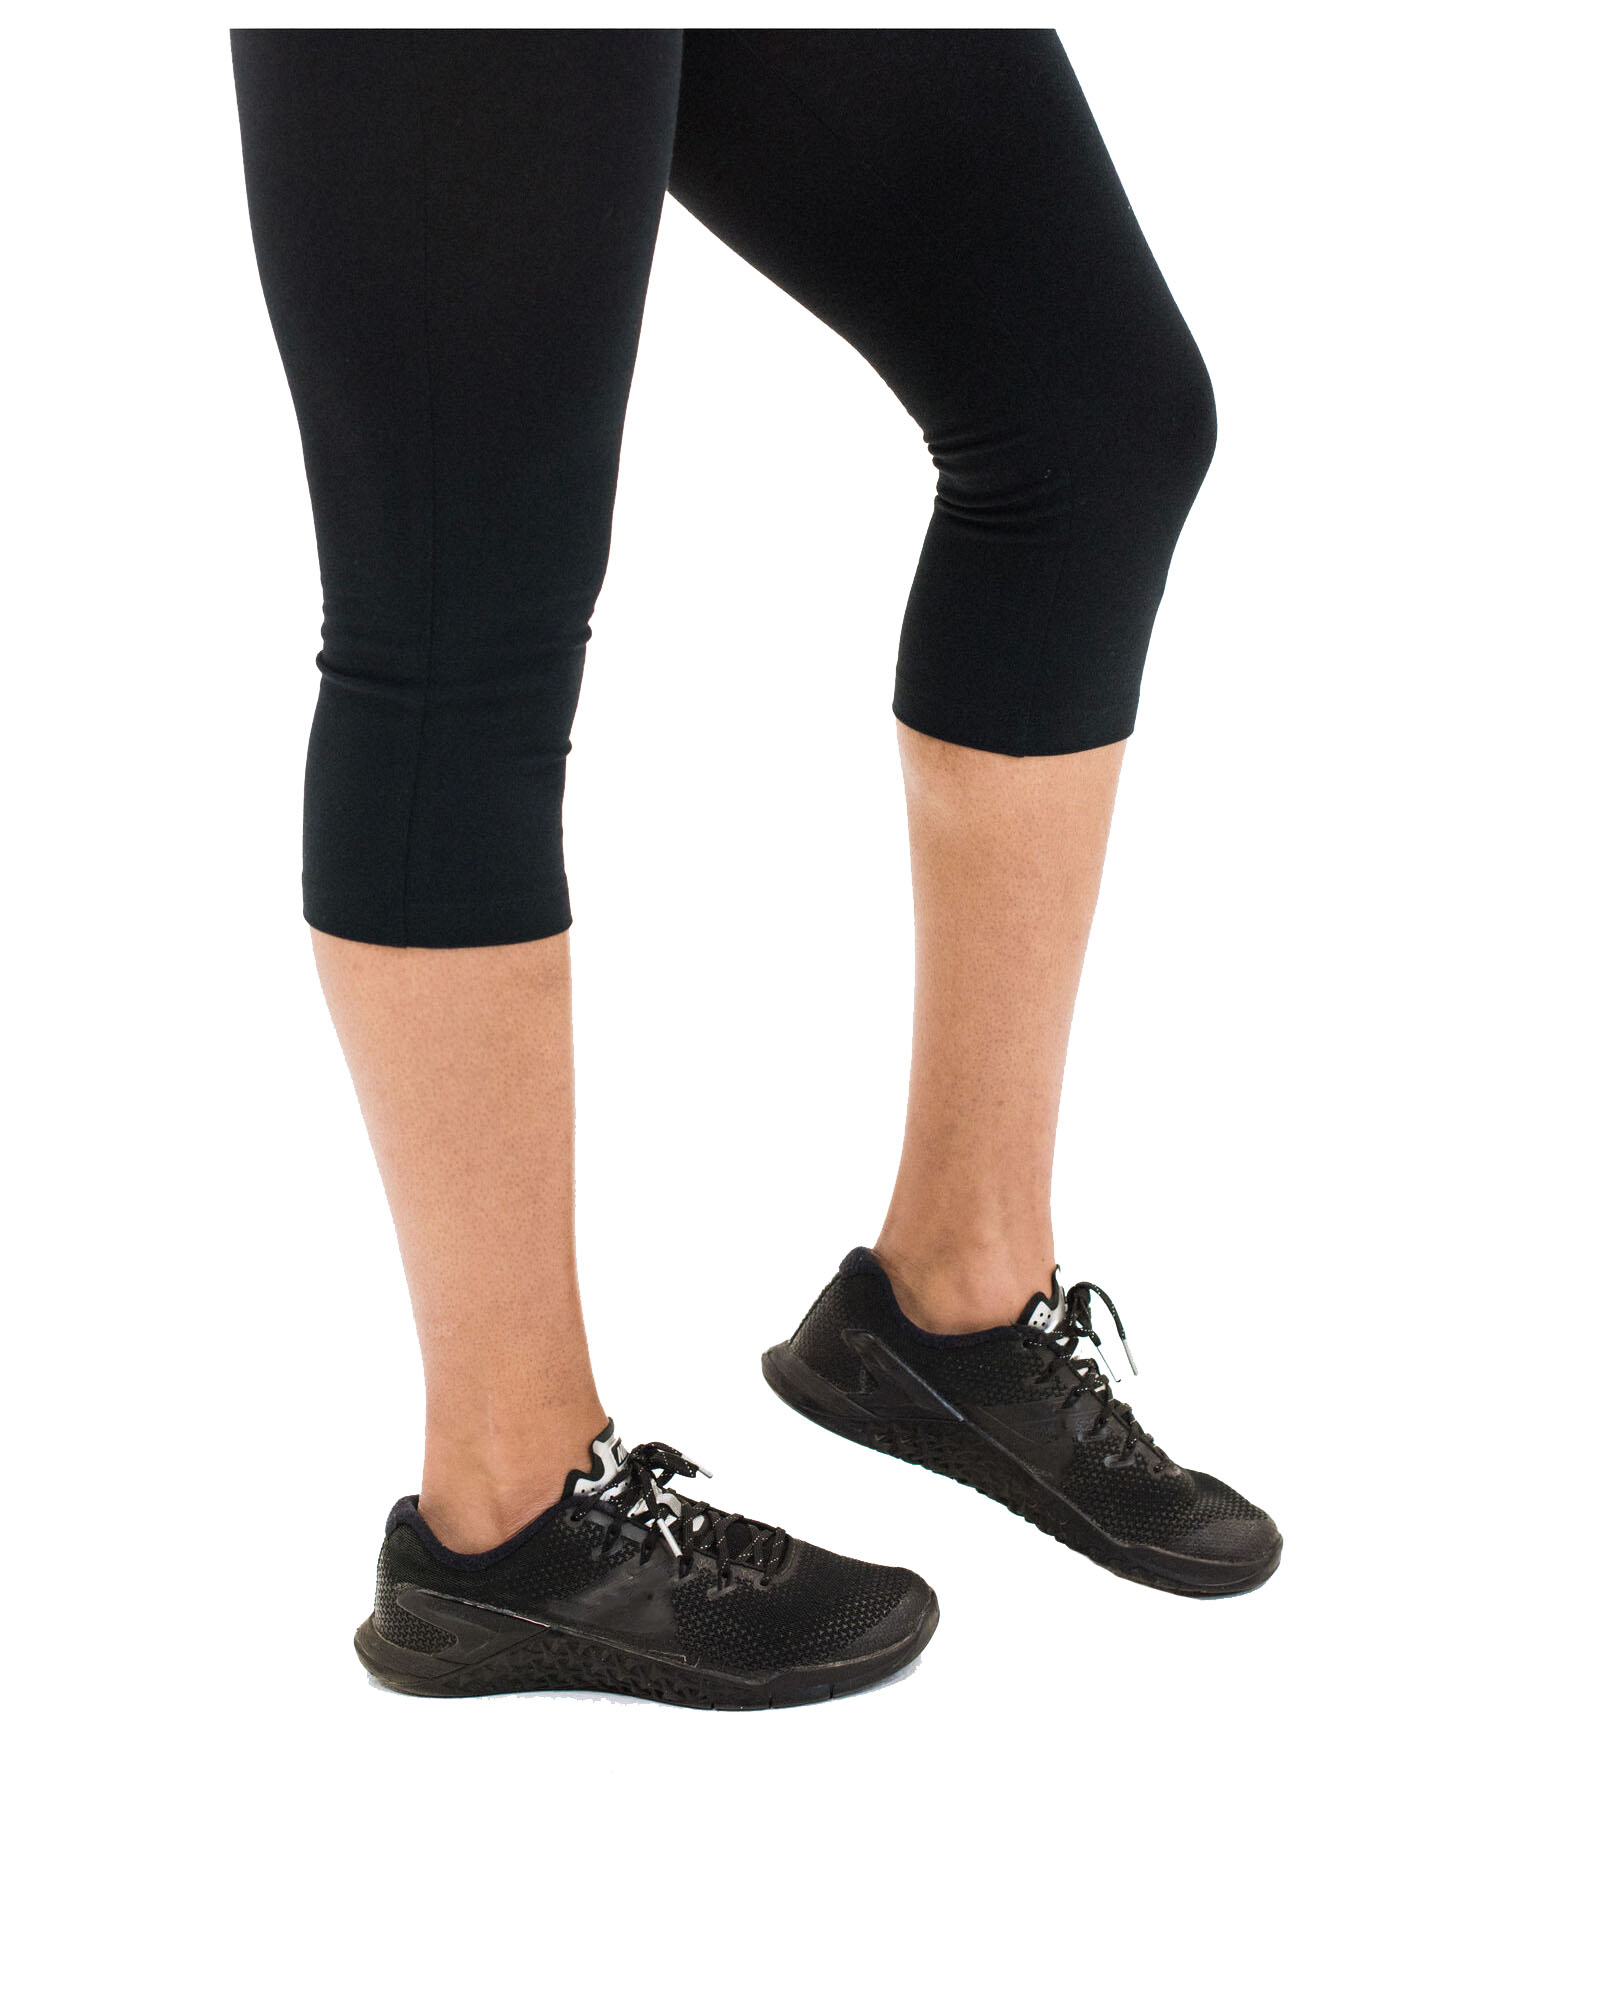 Spalding Women's 19 High Waist Capri Legging Workout Yoga pants